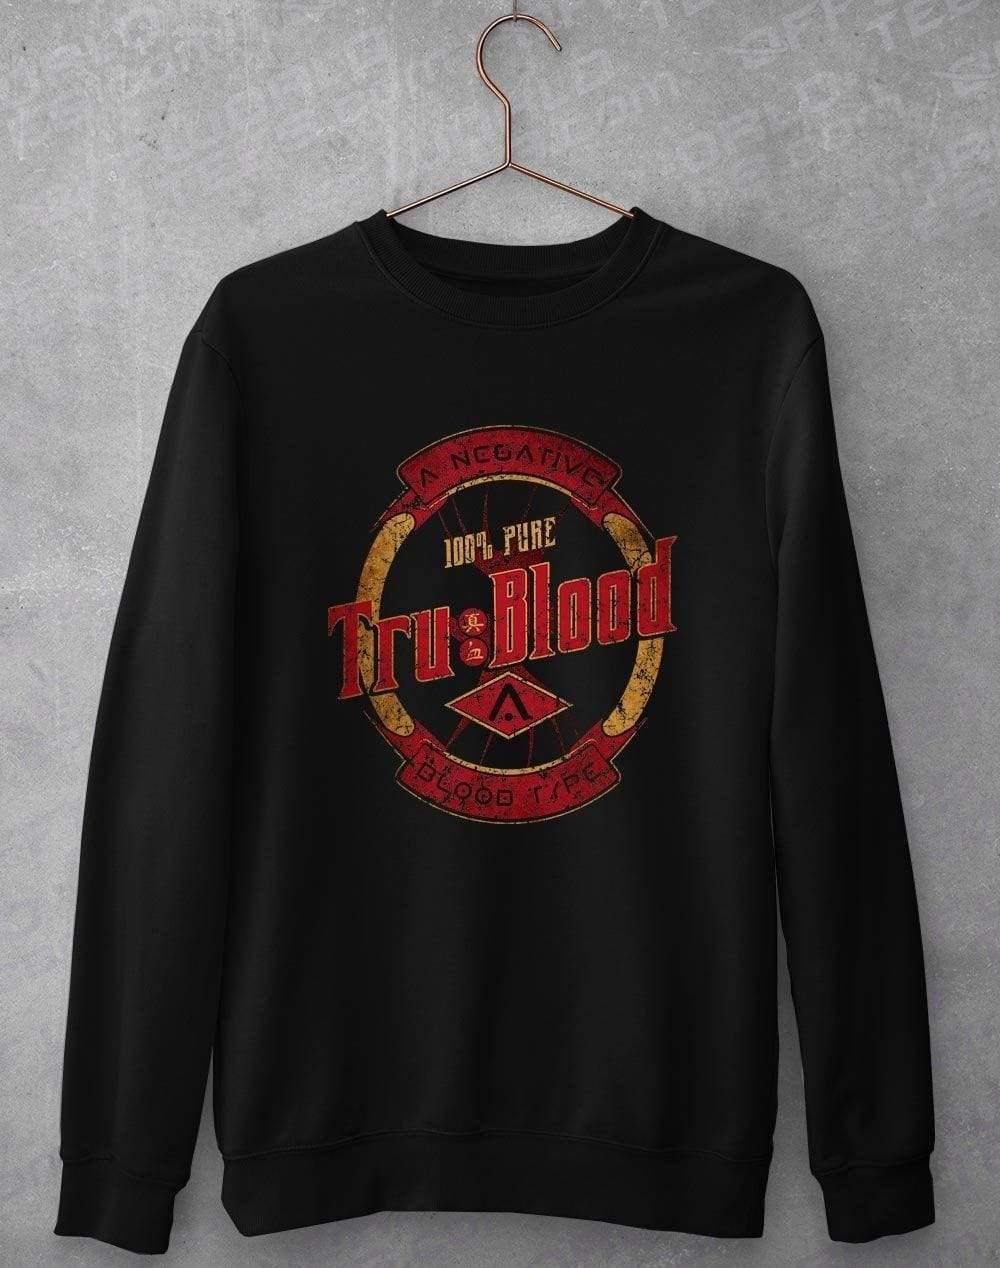 Tru Blood Sweatshirt S / Black  - Off World Tees